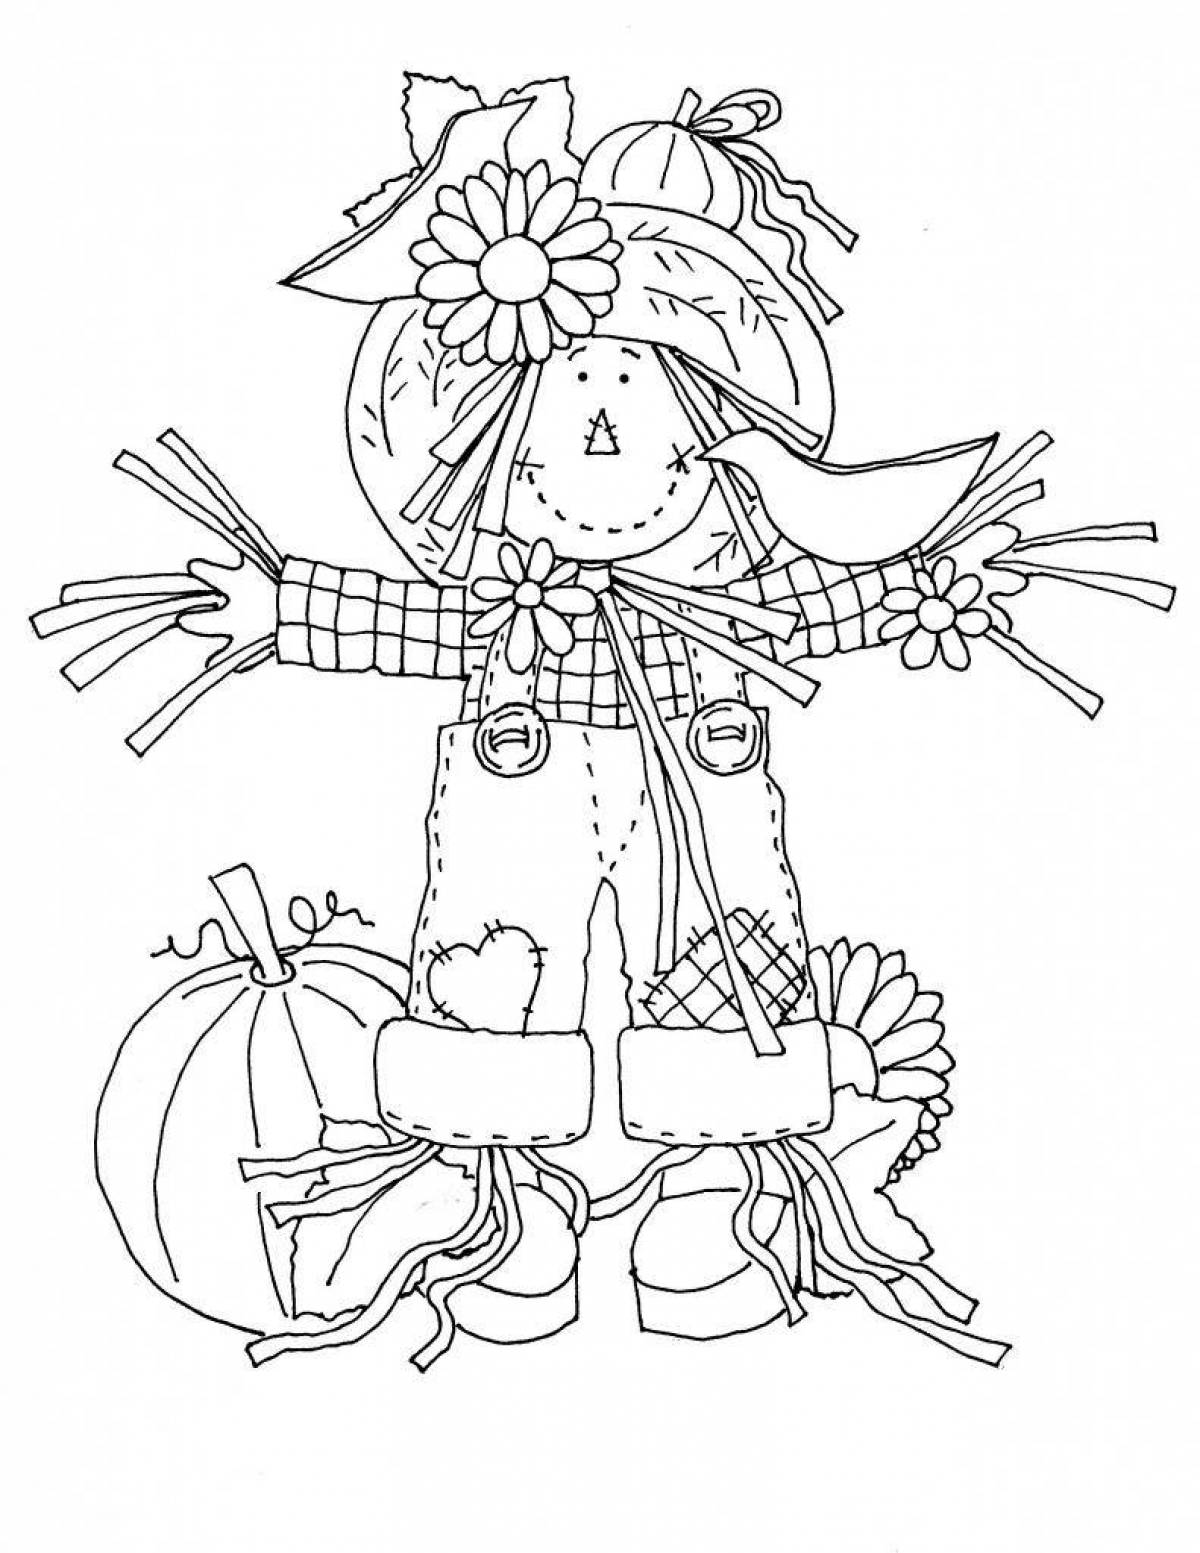 Coloring page happy scarecrow